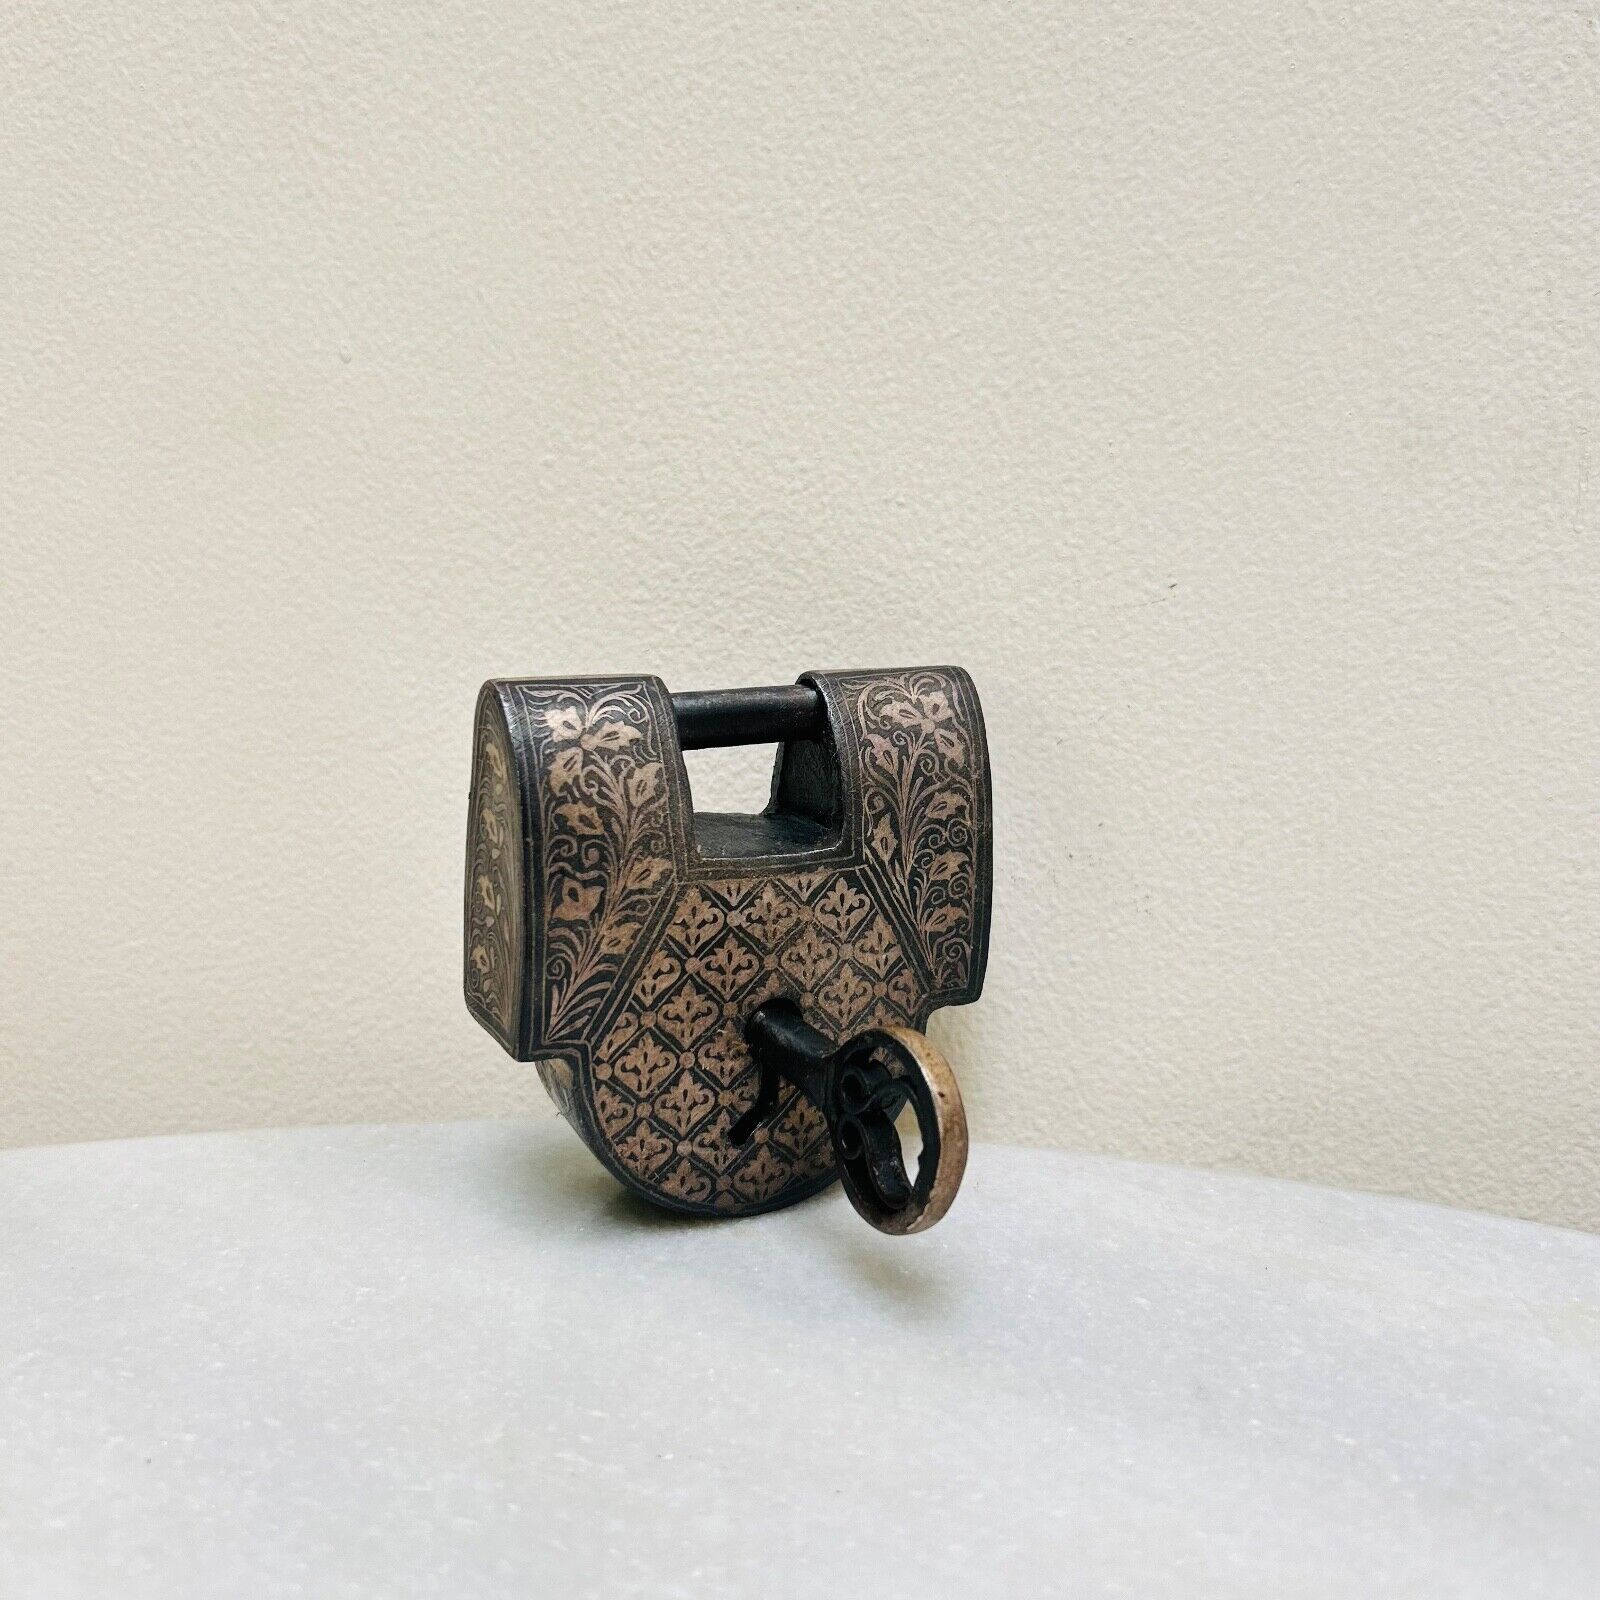 Indian handcrafted vintage silver koftgari padlock